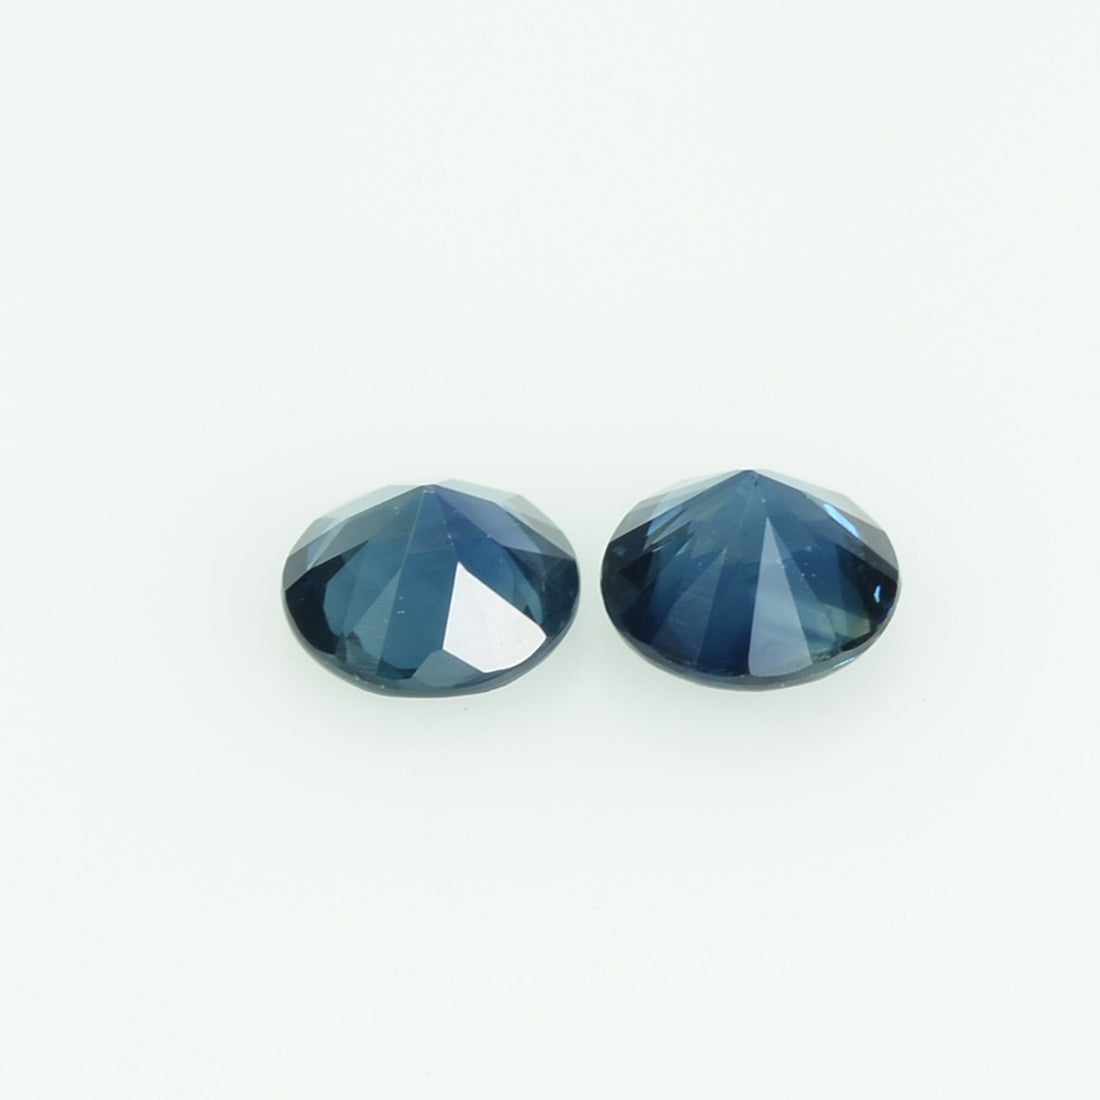 4.0 mm Natural Teal Blue Green Sapphire Loose Gemstone Round Cut